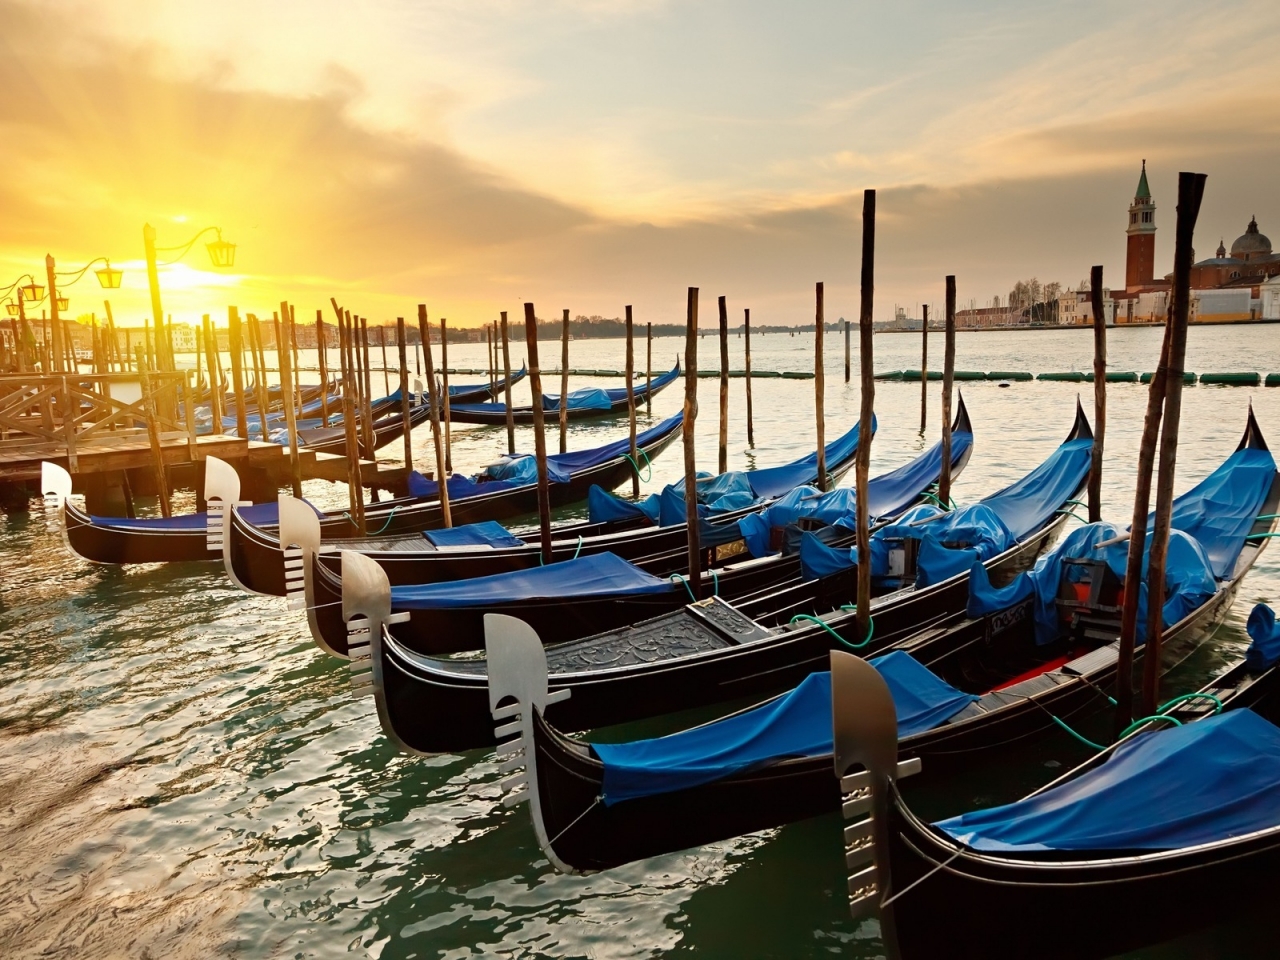 Venice Sunrise for 1280 x 960 resolution